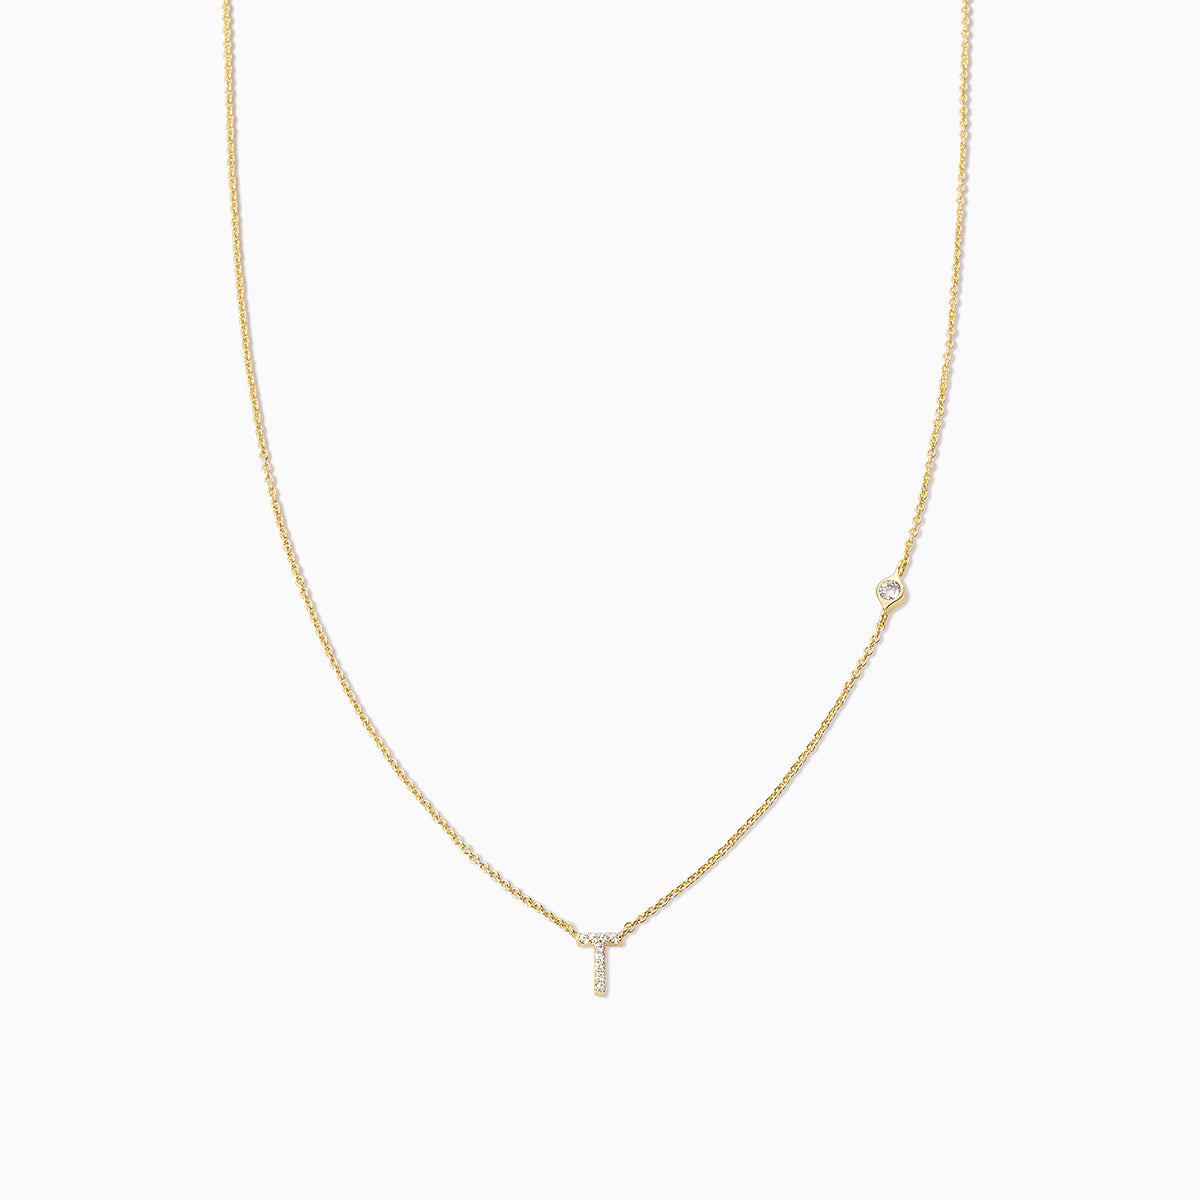 Pavé Initial Necklace | Gold T | Product Image | Uncommon James